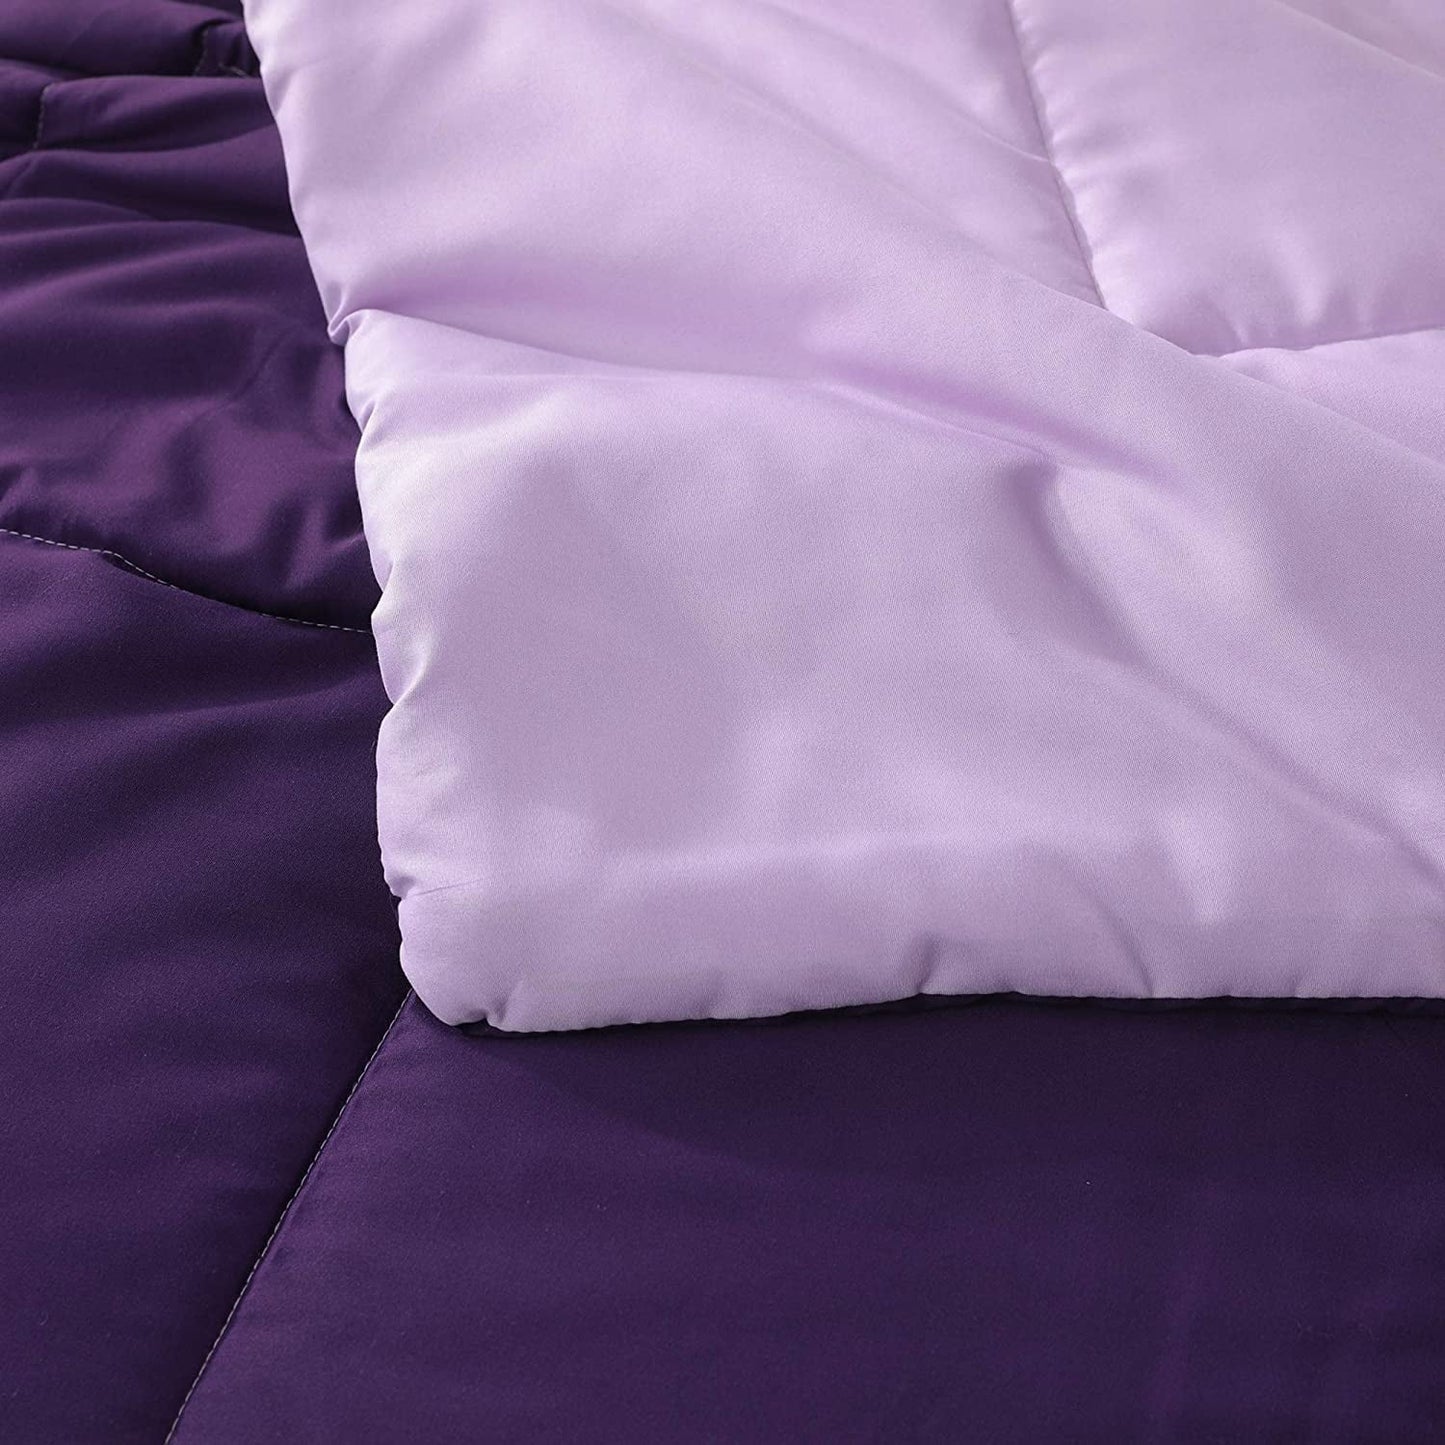 Exclusivo Mezcla Lightweight Reversible 3-Piece Comforter Set All Seasons, Down Alternative Comforter with 2 Pillow Shams, Queen Size, Deep Purple/ Lilac